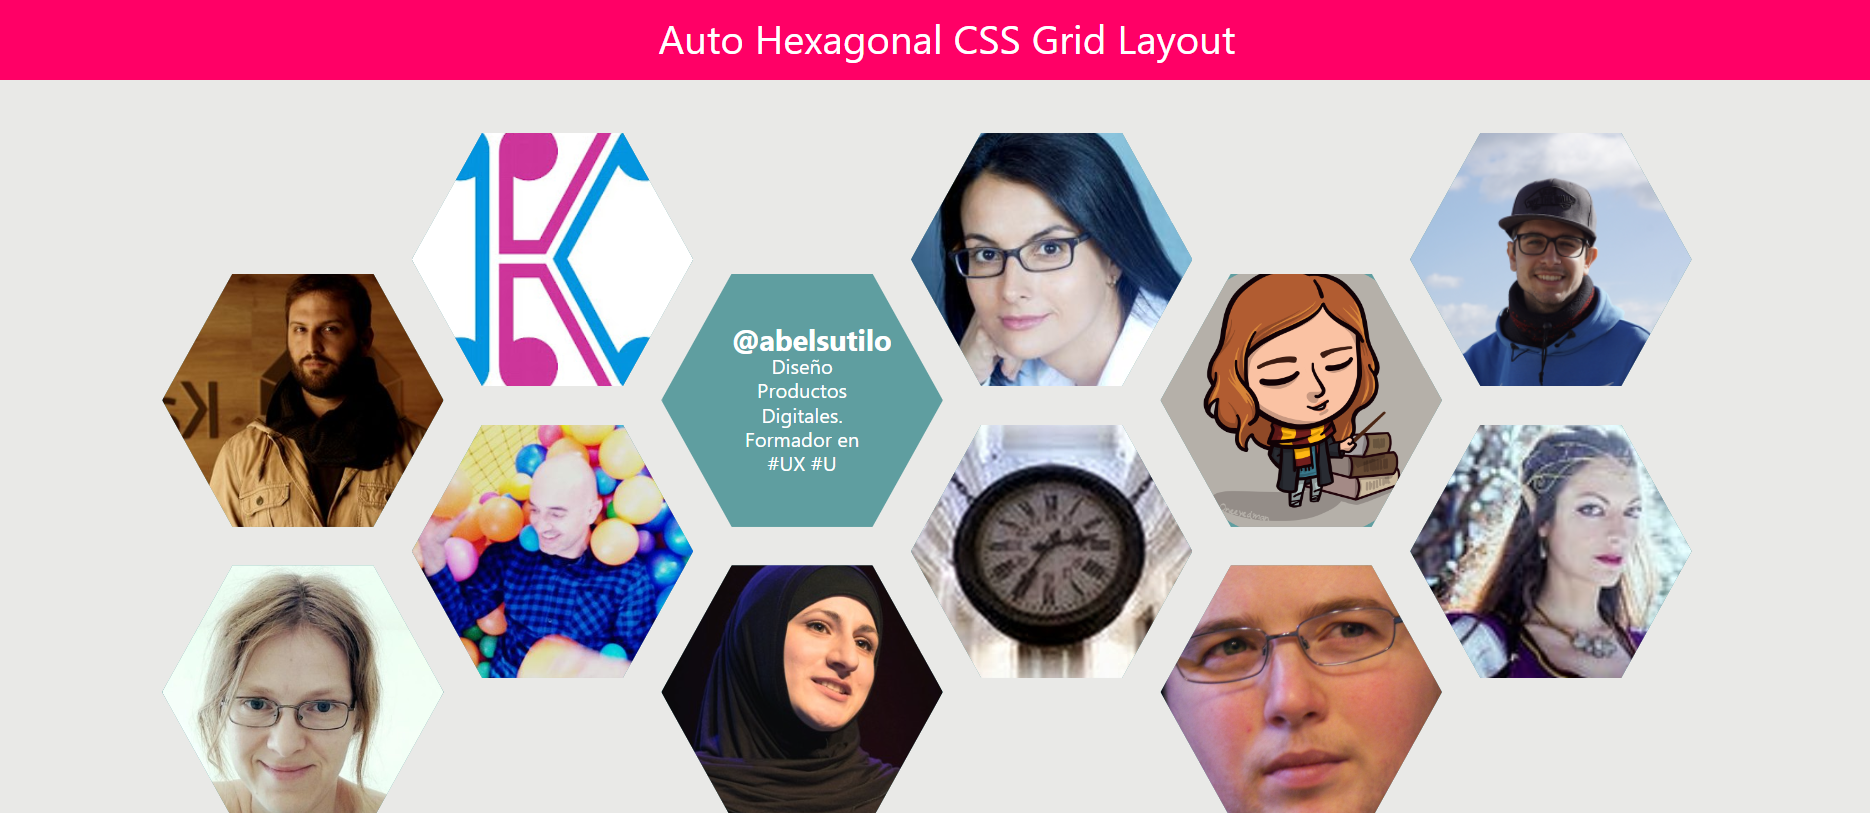 Auto Hexagonal CSS Grid Layout